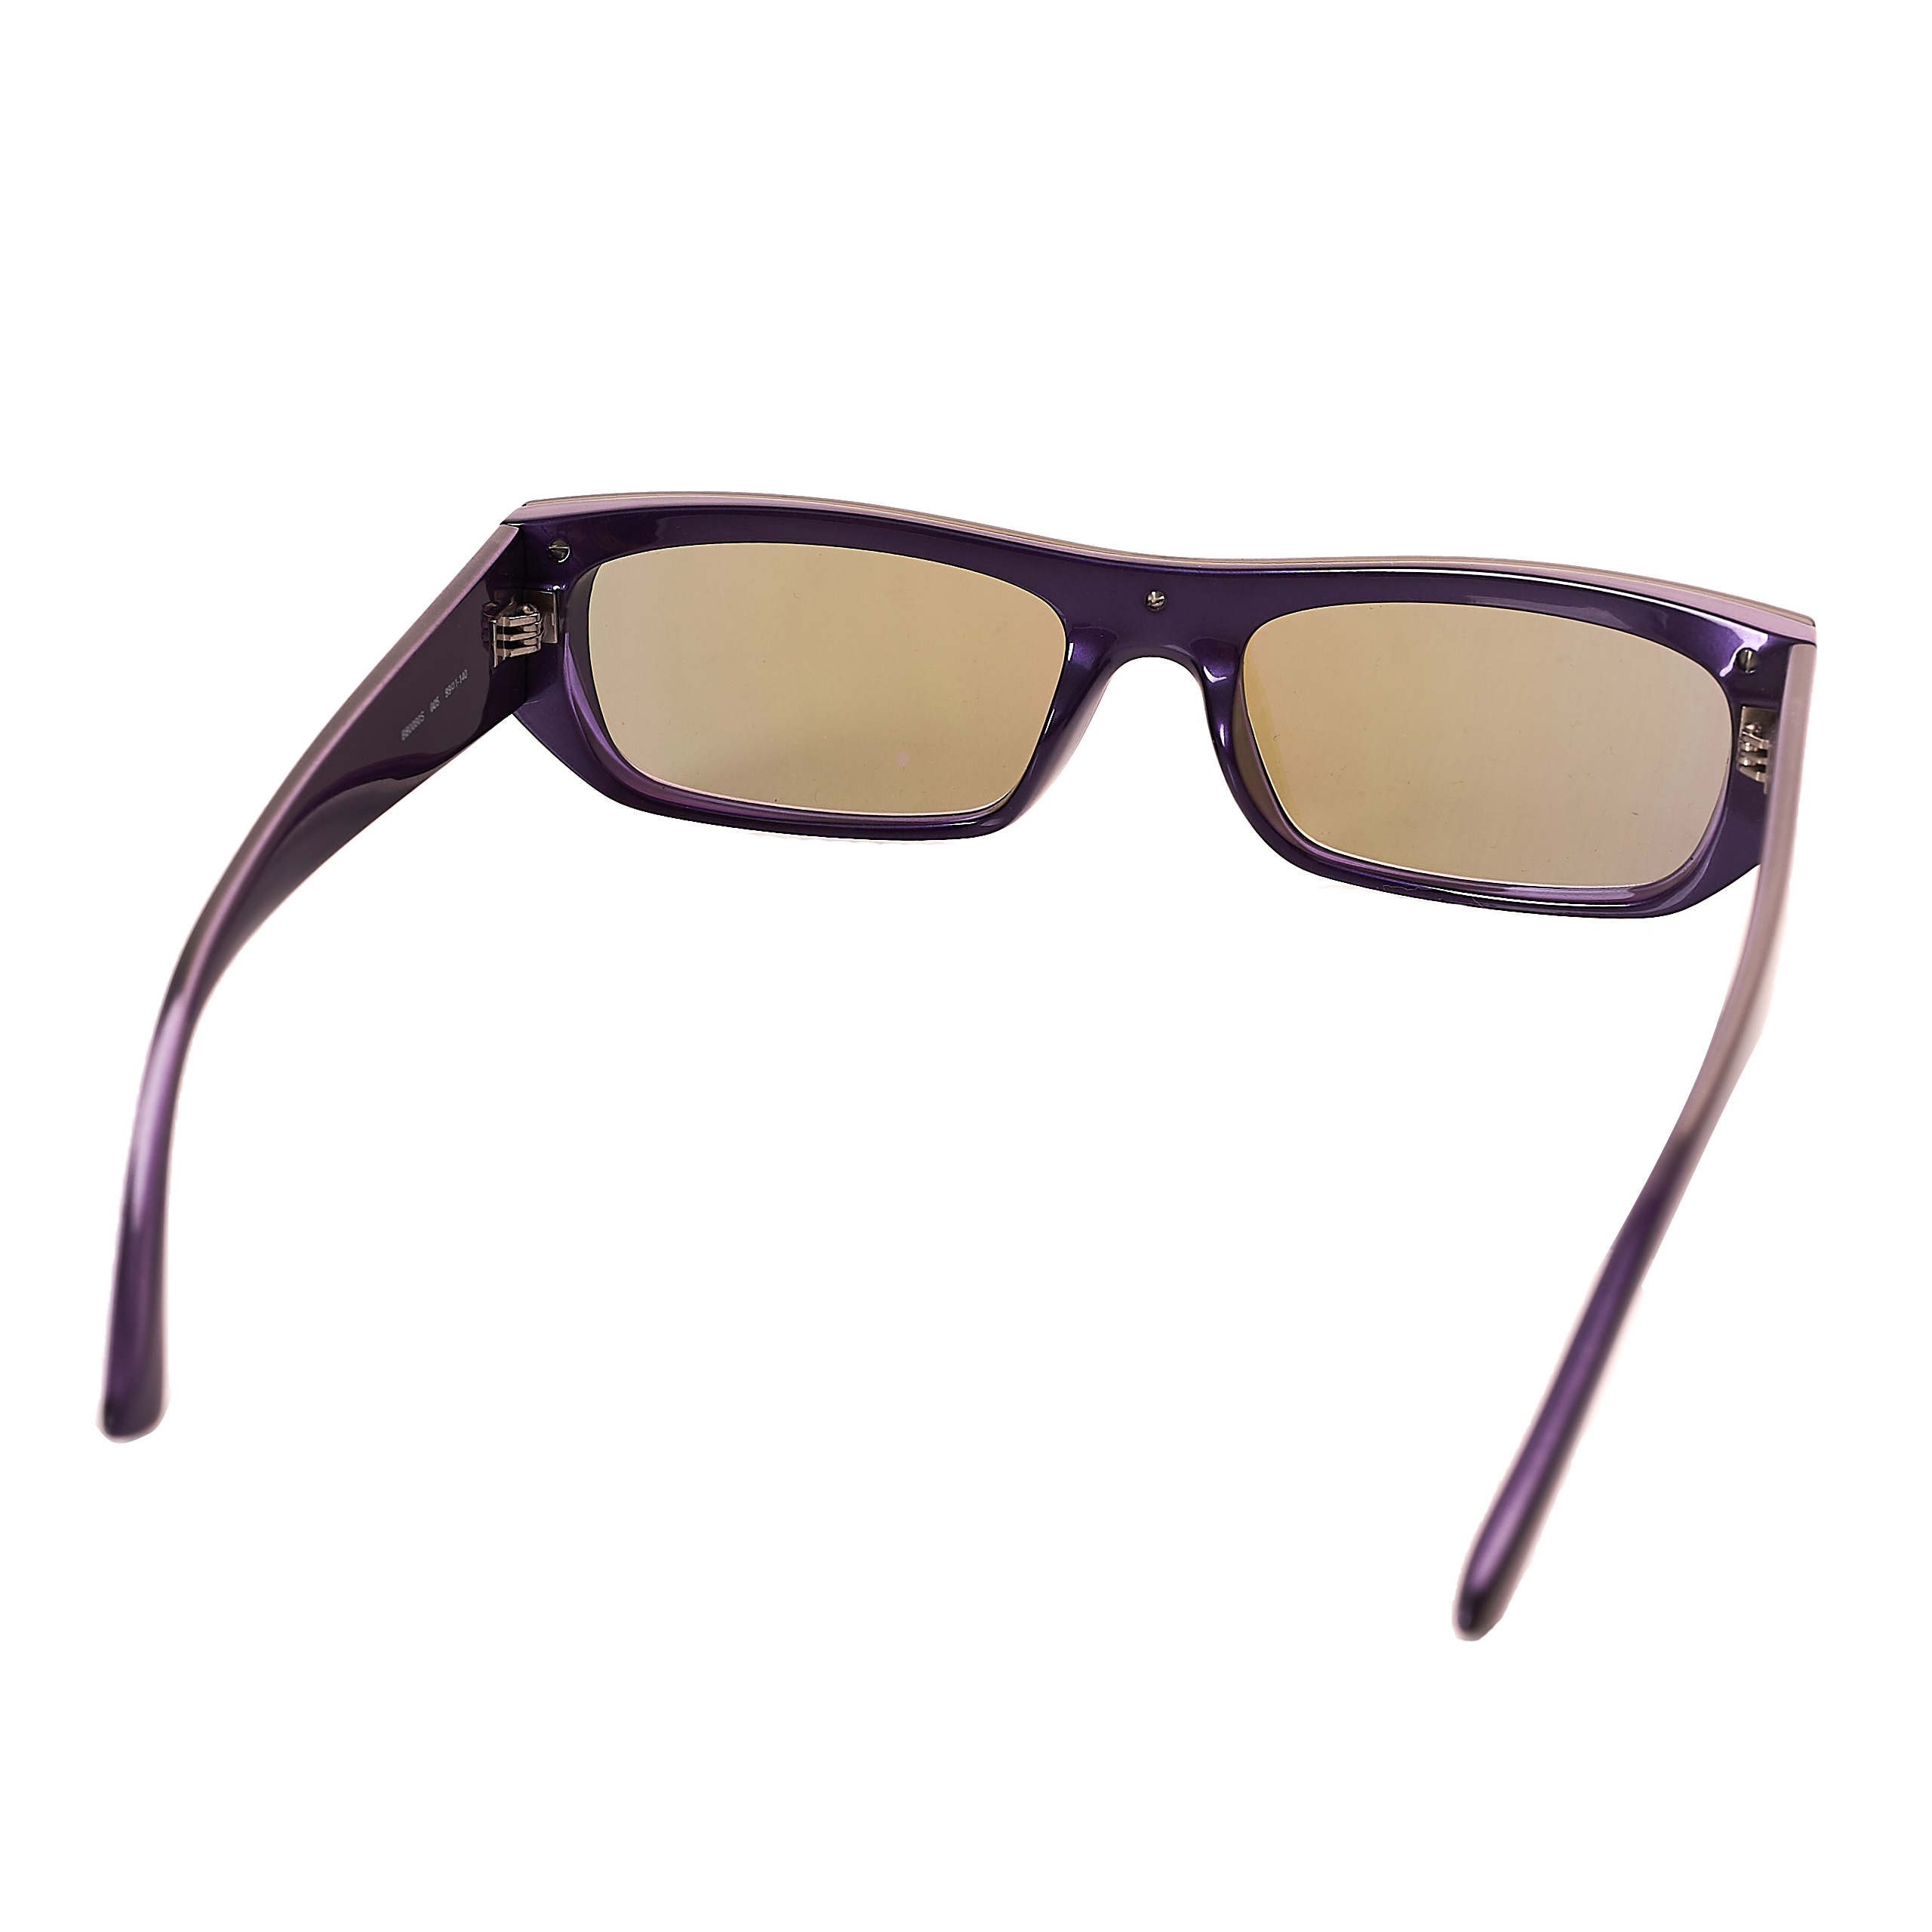 Фиолетовые очки с логотипом Balenciaga 609370/T0003/5067, размер One Size 609370/T0003/5067 - фото 3